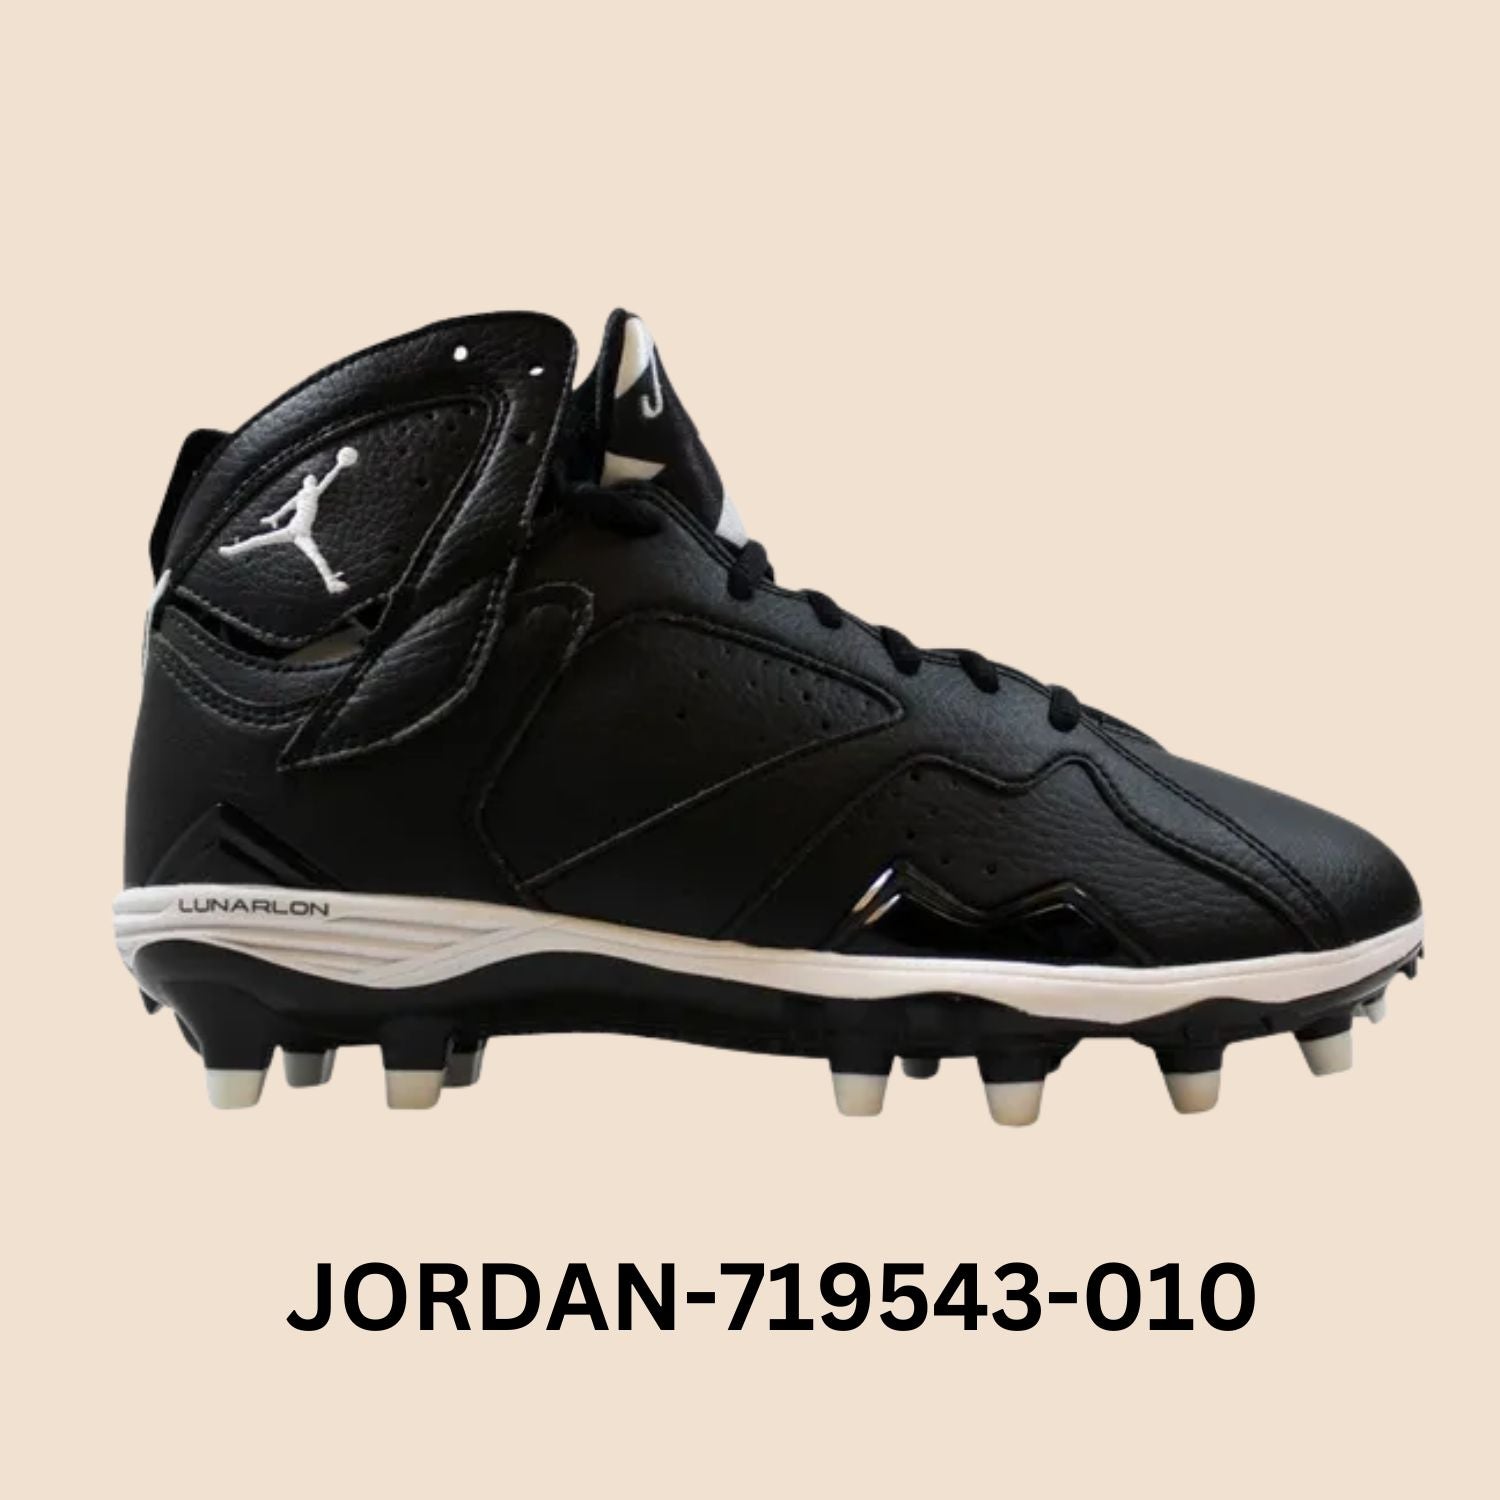 Air Jordan 7 Retro TD Cleats "Black White" Men's Style# 719543-010